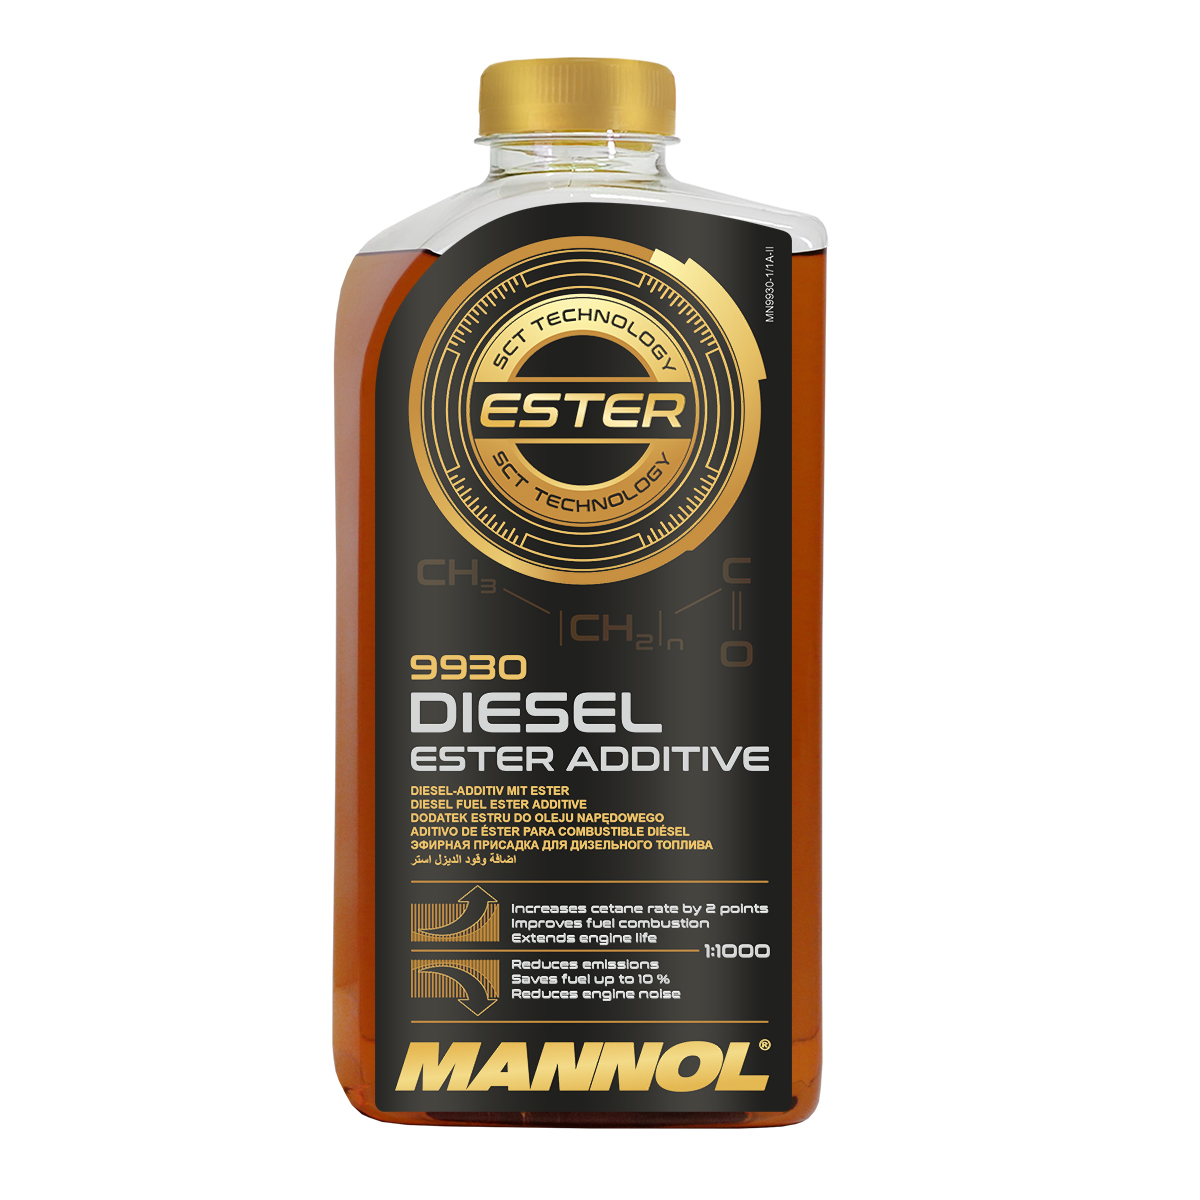 Mannol 9930 Diesel Ester Additiv Kraftstoffadditiv 1 Liter